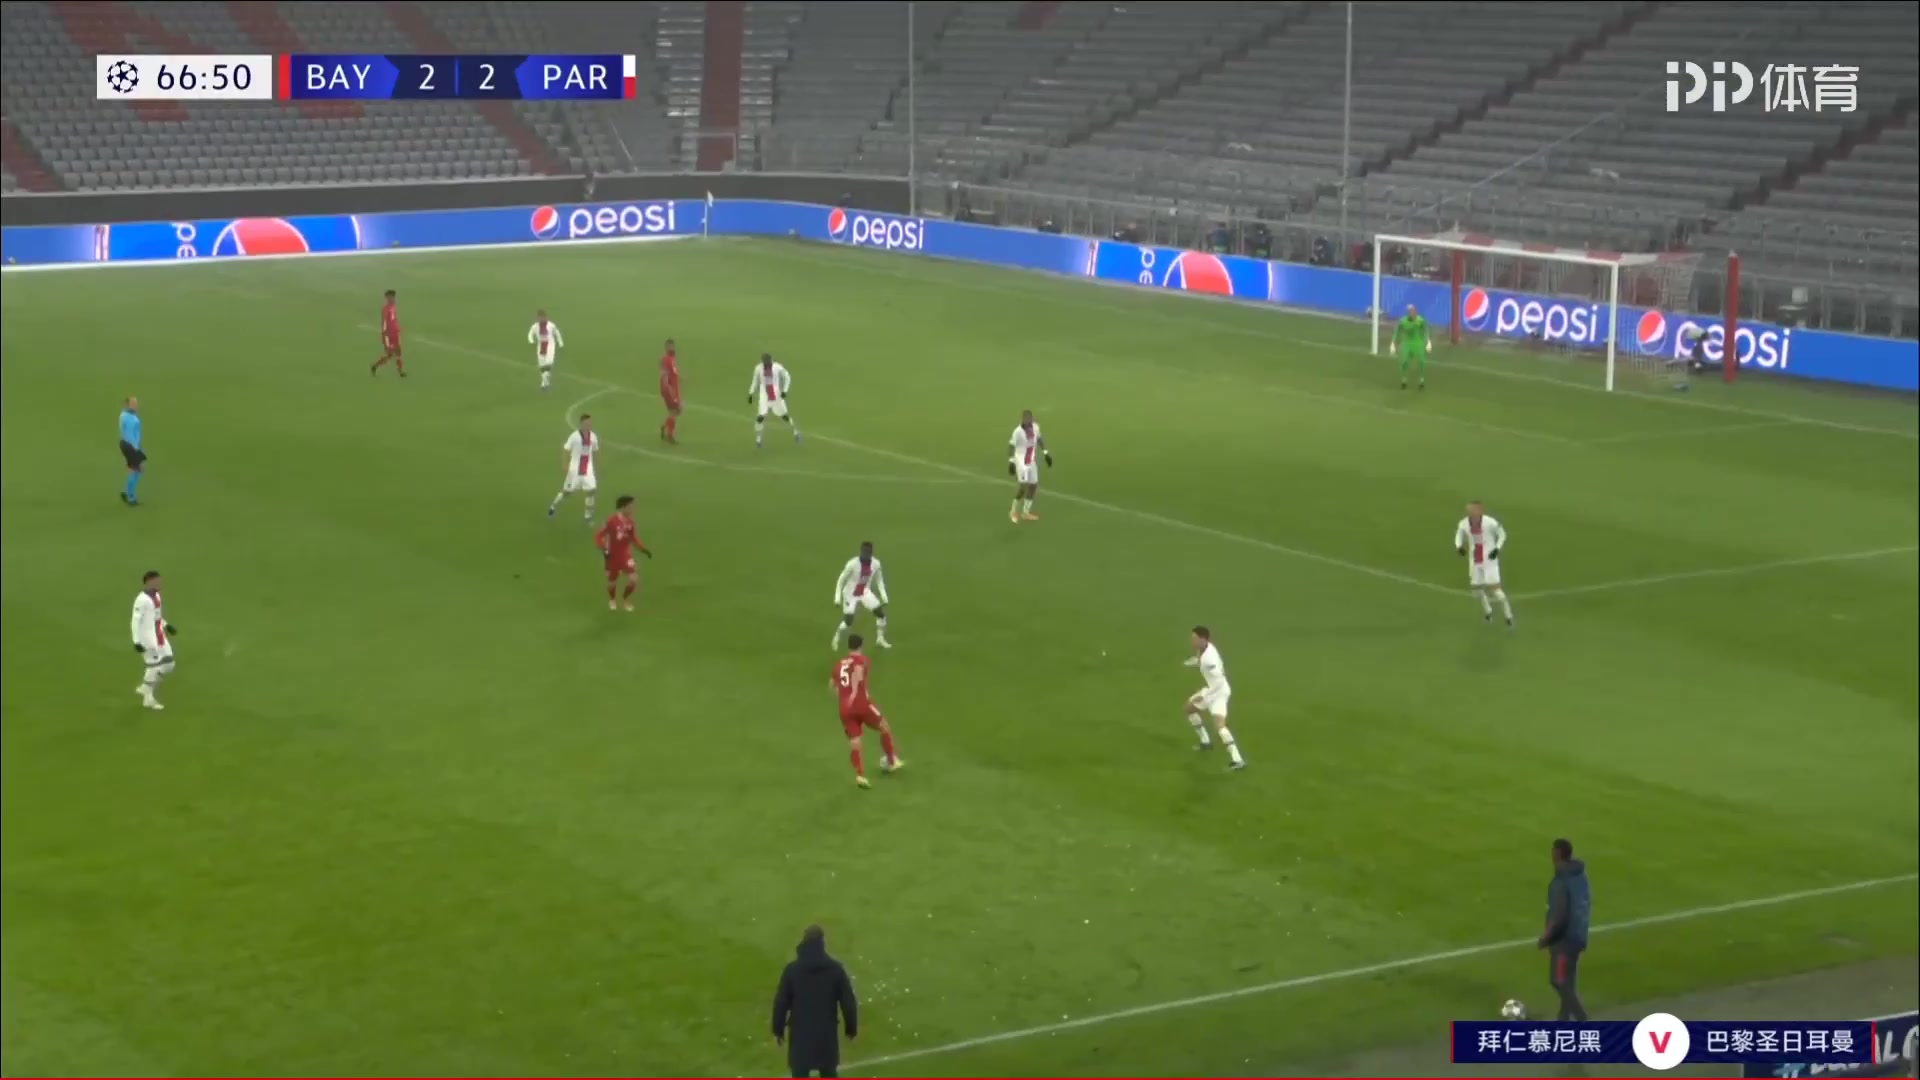 UEFA CL Bayern Munchen Vs Paris Saint Germain (PSG) Kylian Mbappe Lottin Goal in 68 min, Score 2:3